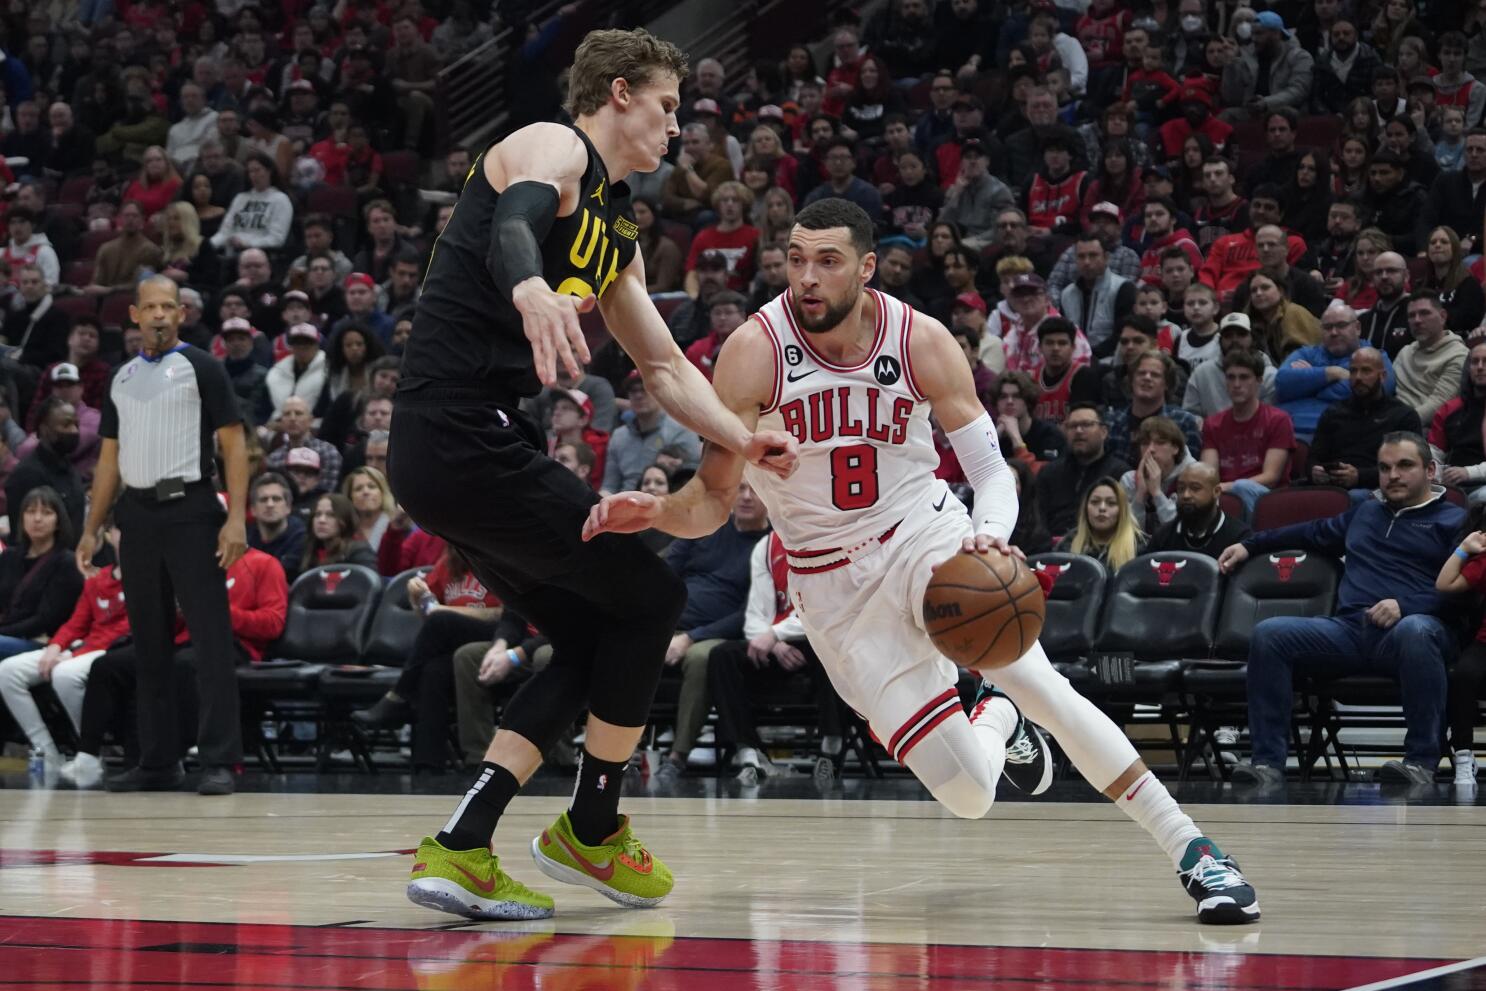 NBA Rumors: Bulls Could Trade Zach LaVine And Lauri Markkanen To